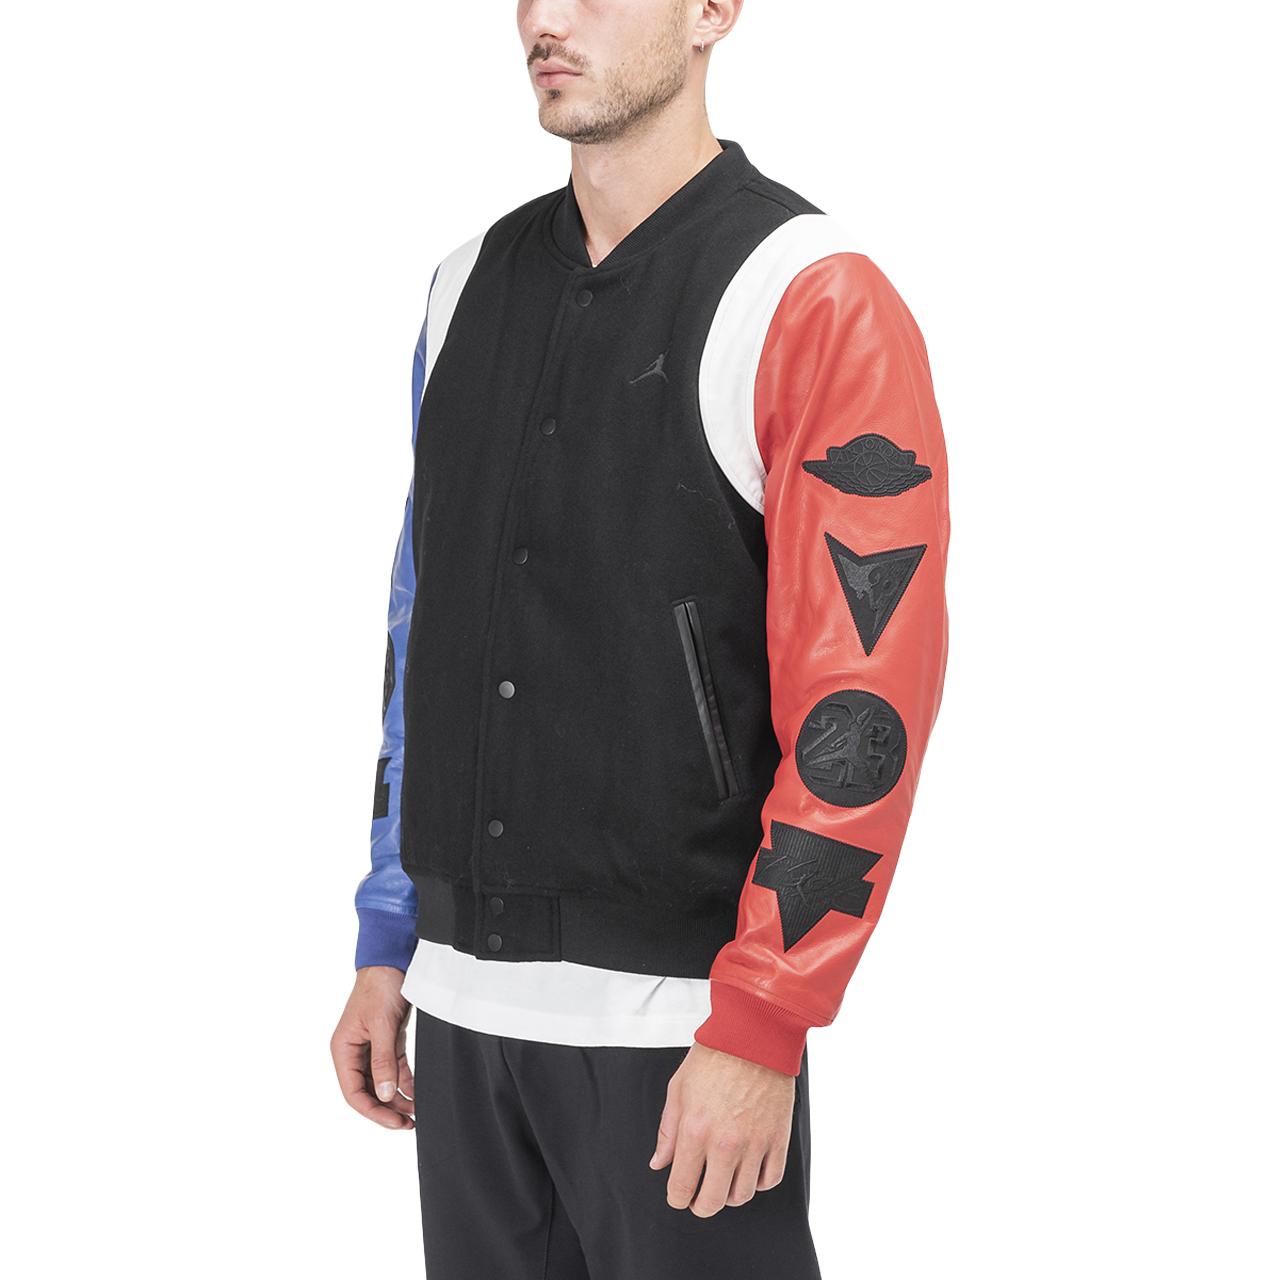 Nike Synthetic Air Jordan Dna Varsity Jacket in Black for Men - Lyst